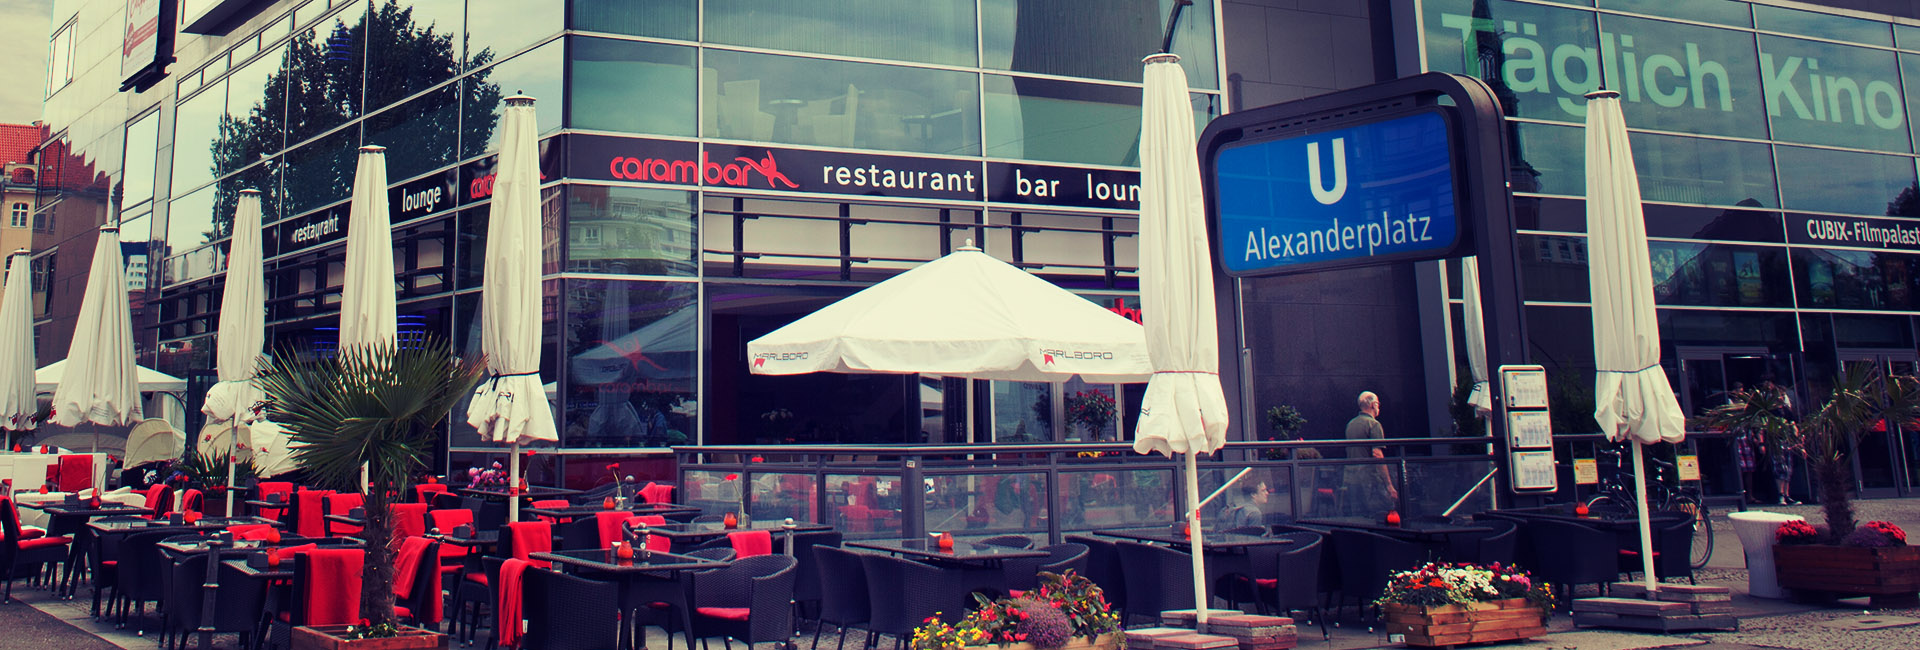 carambar-bar-lounge-restaurant-eventlocation-alexanderplatz-berlin-slider-1920x650-1